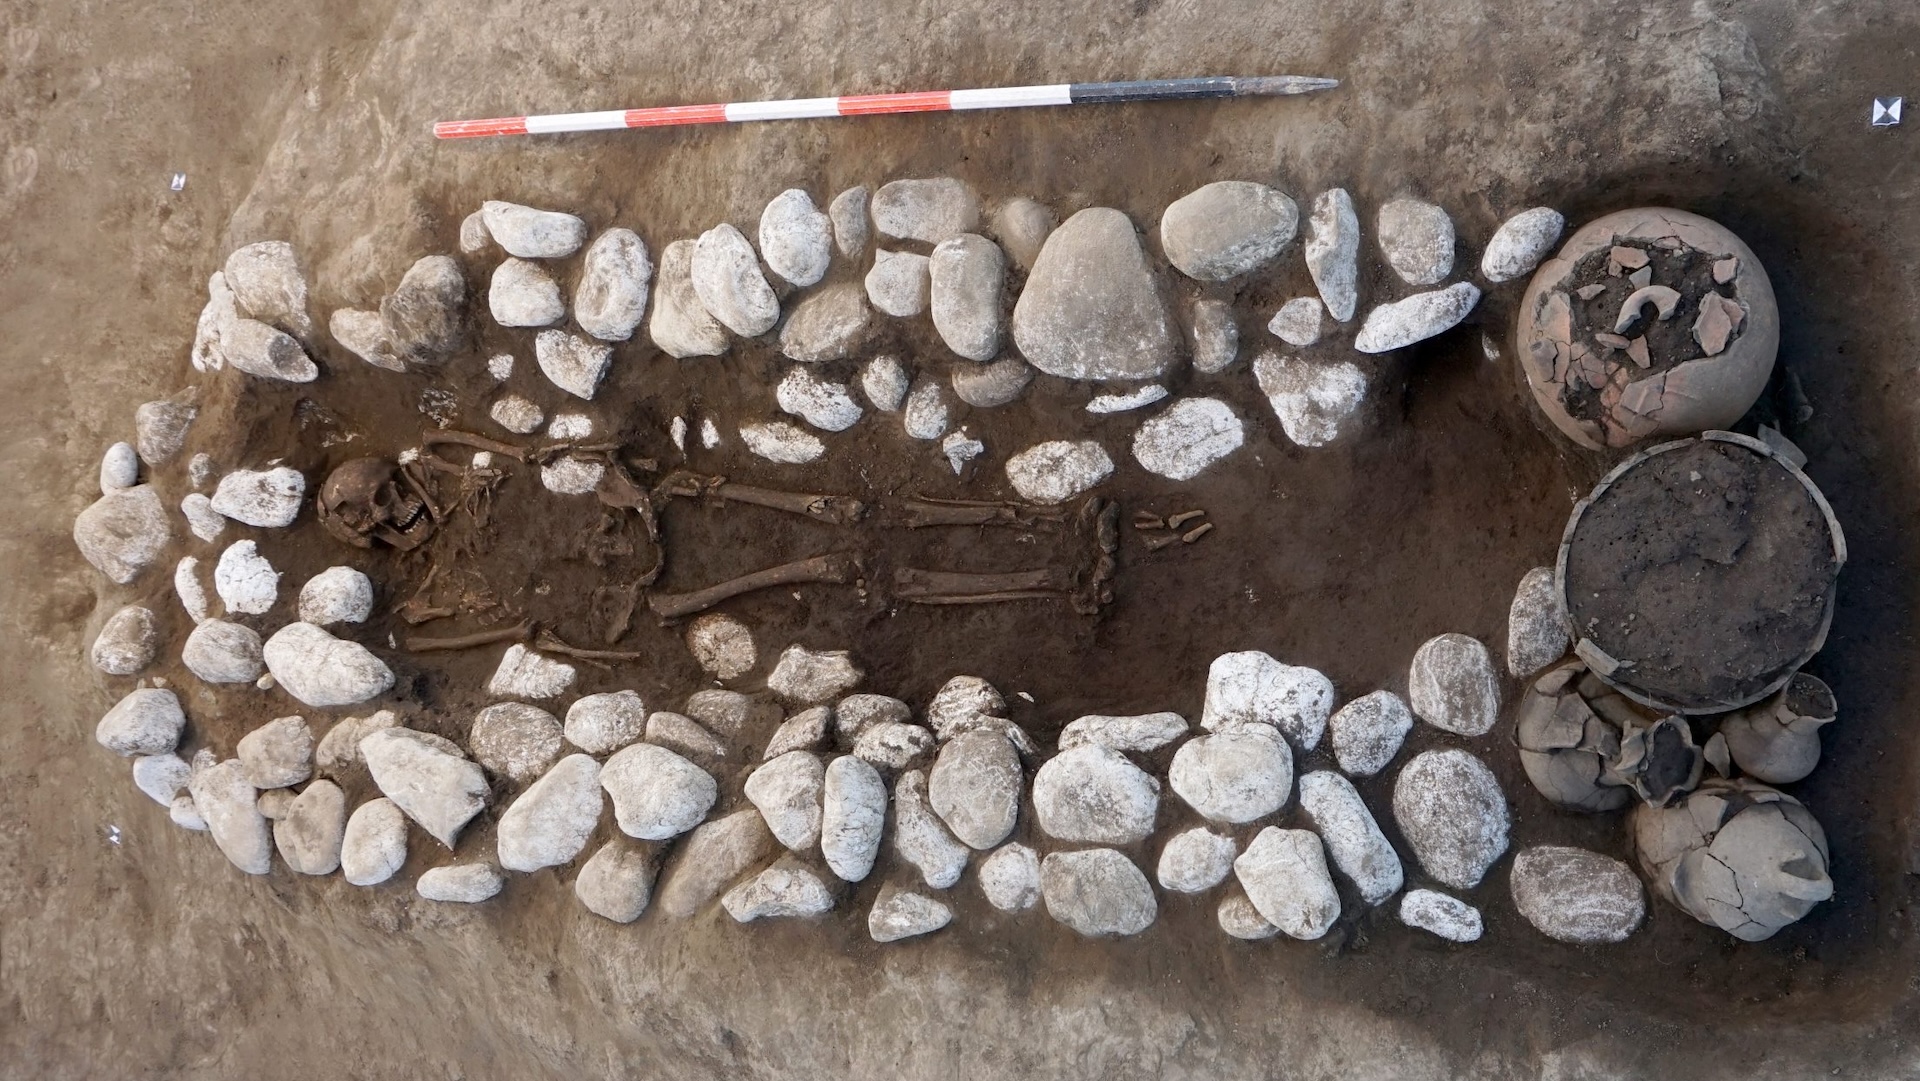 Iron Age necropolis that predates Rome unearthed near Naples | Live Science